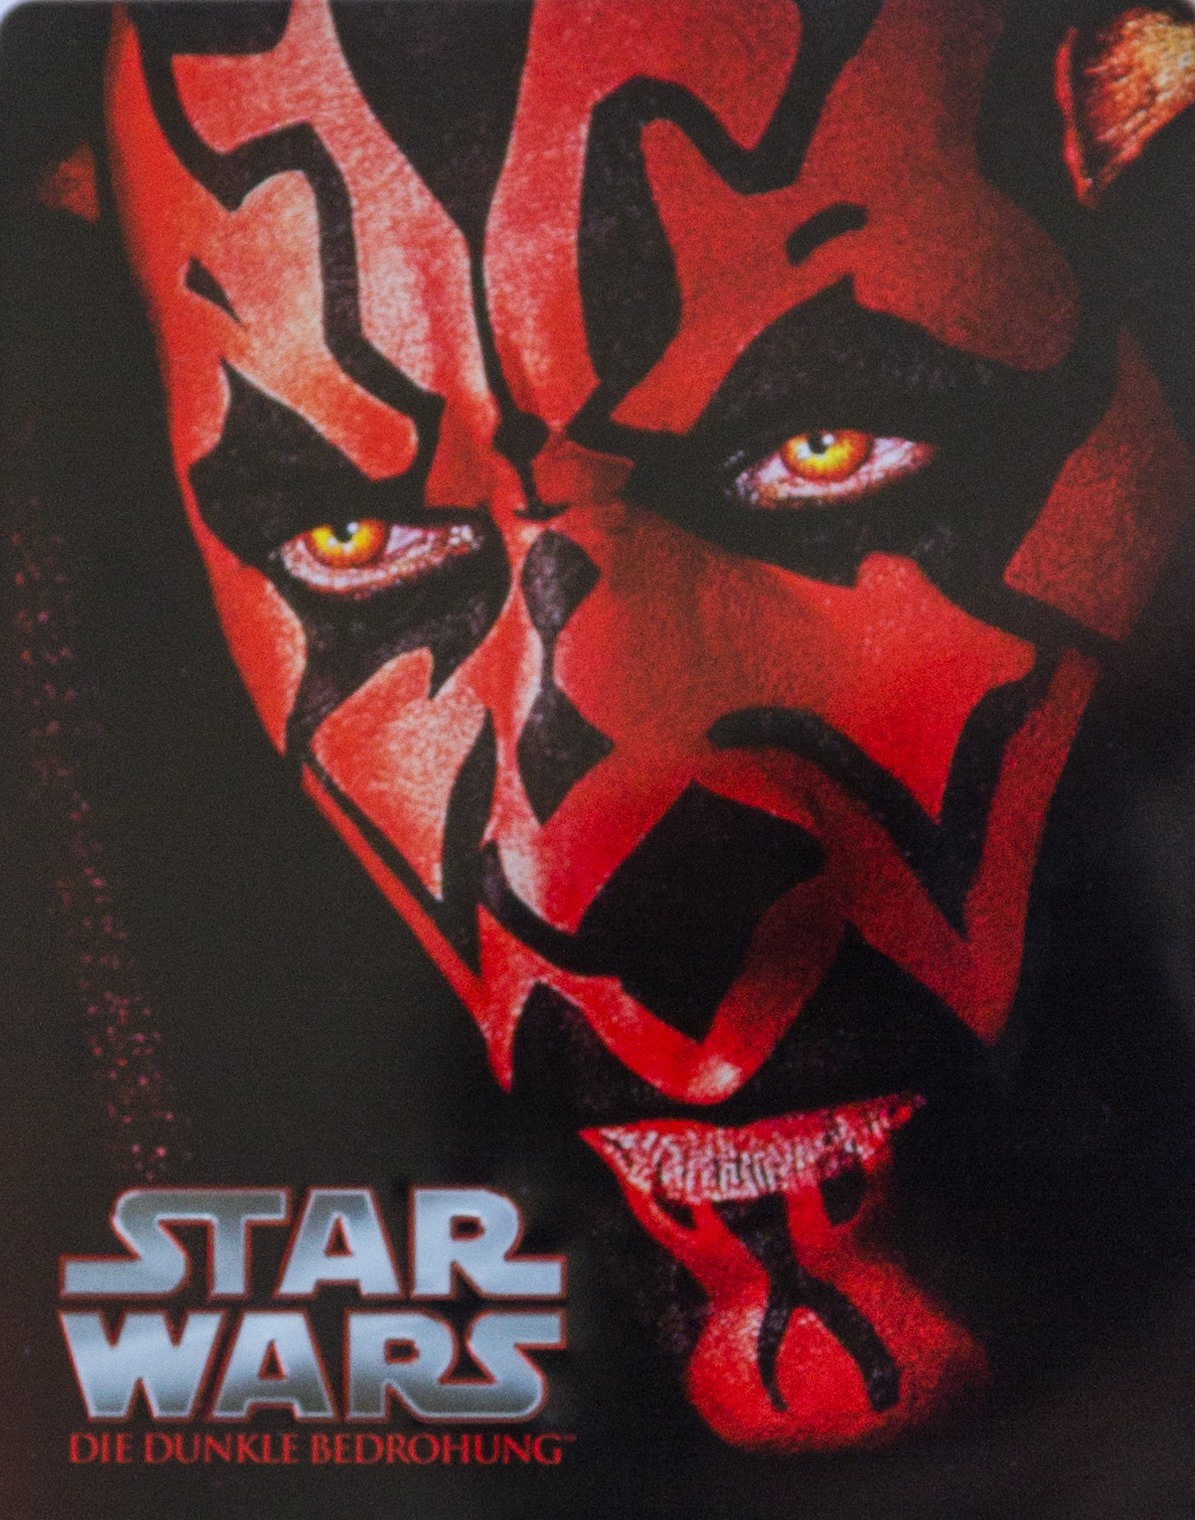 Star Wars: Episode I - Die dunkle Bedrohung - Steelbook Edition (Blu-ray)